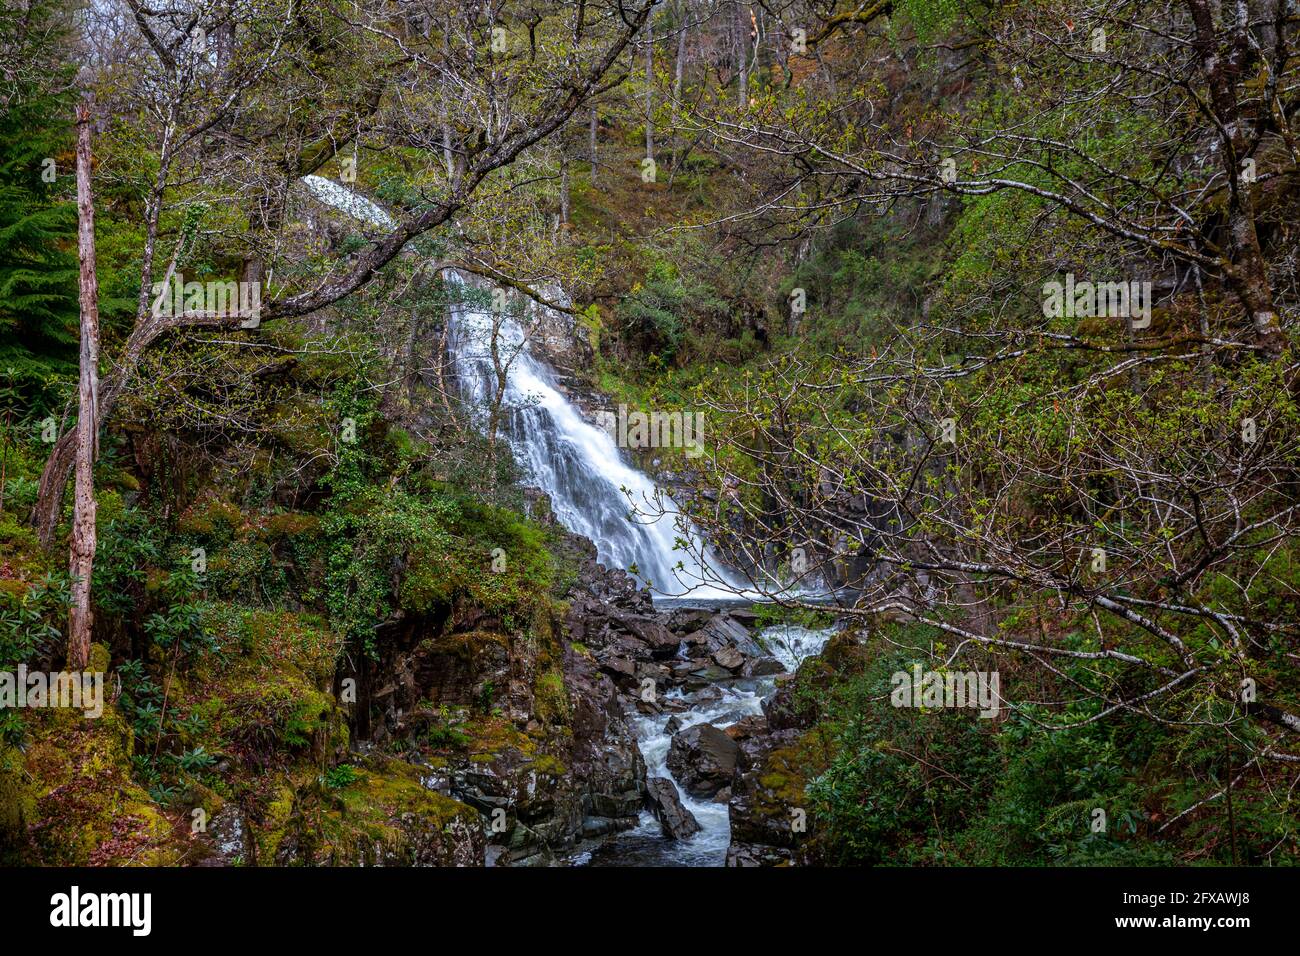 Pistyll Cain Waterfall, Coed y Brenin Forest, Gwynedd, Wales. Stock Photo